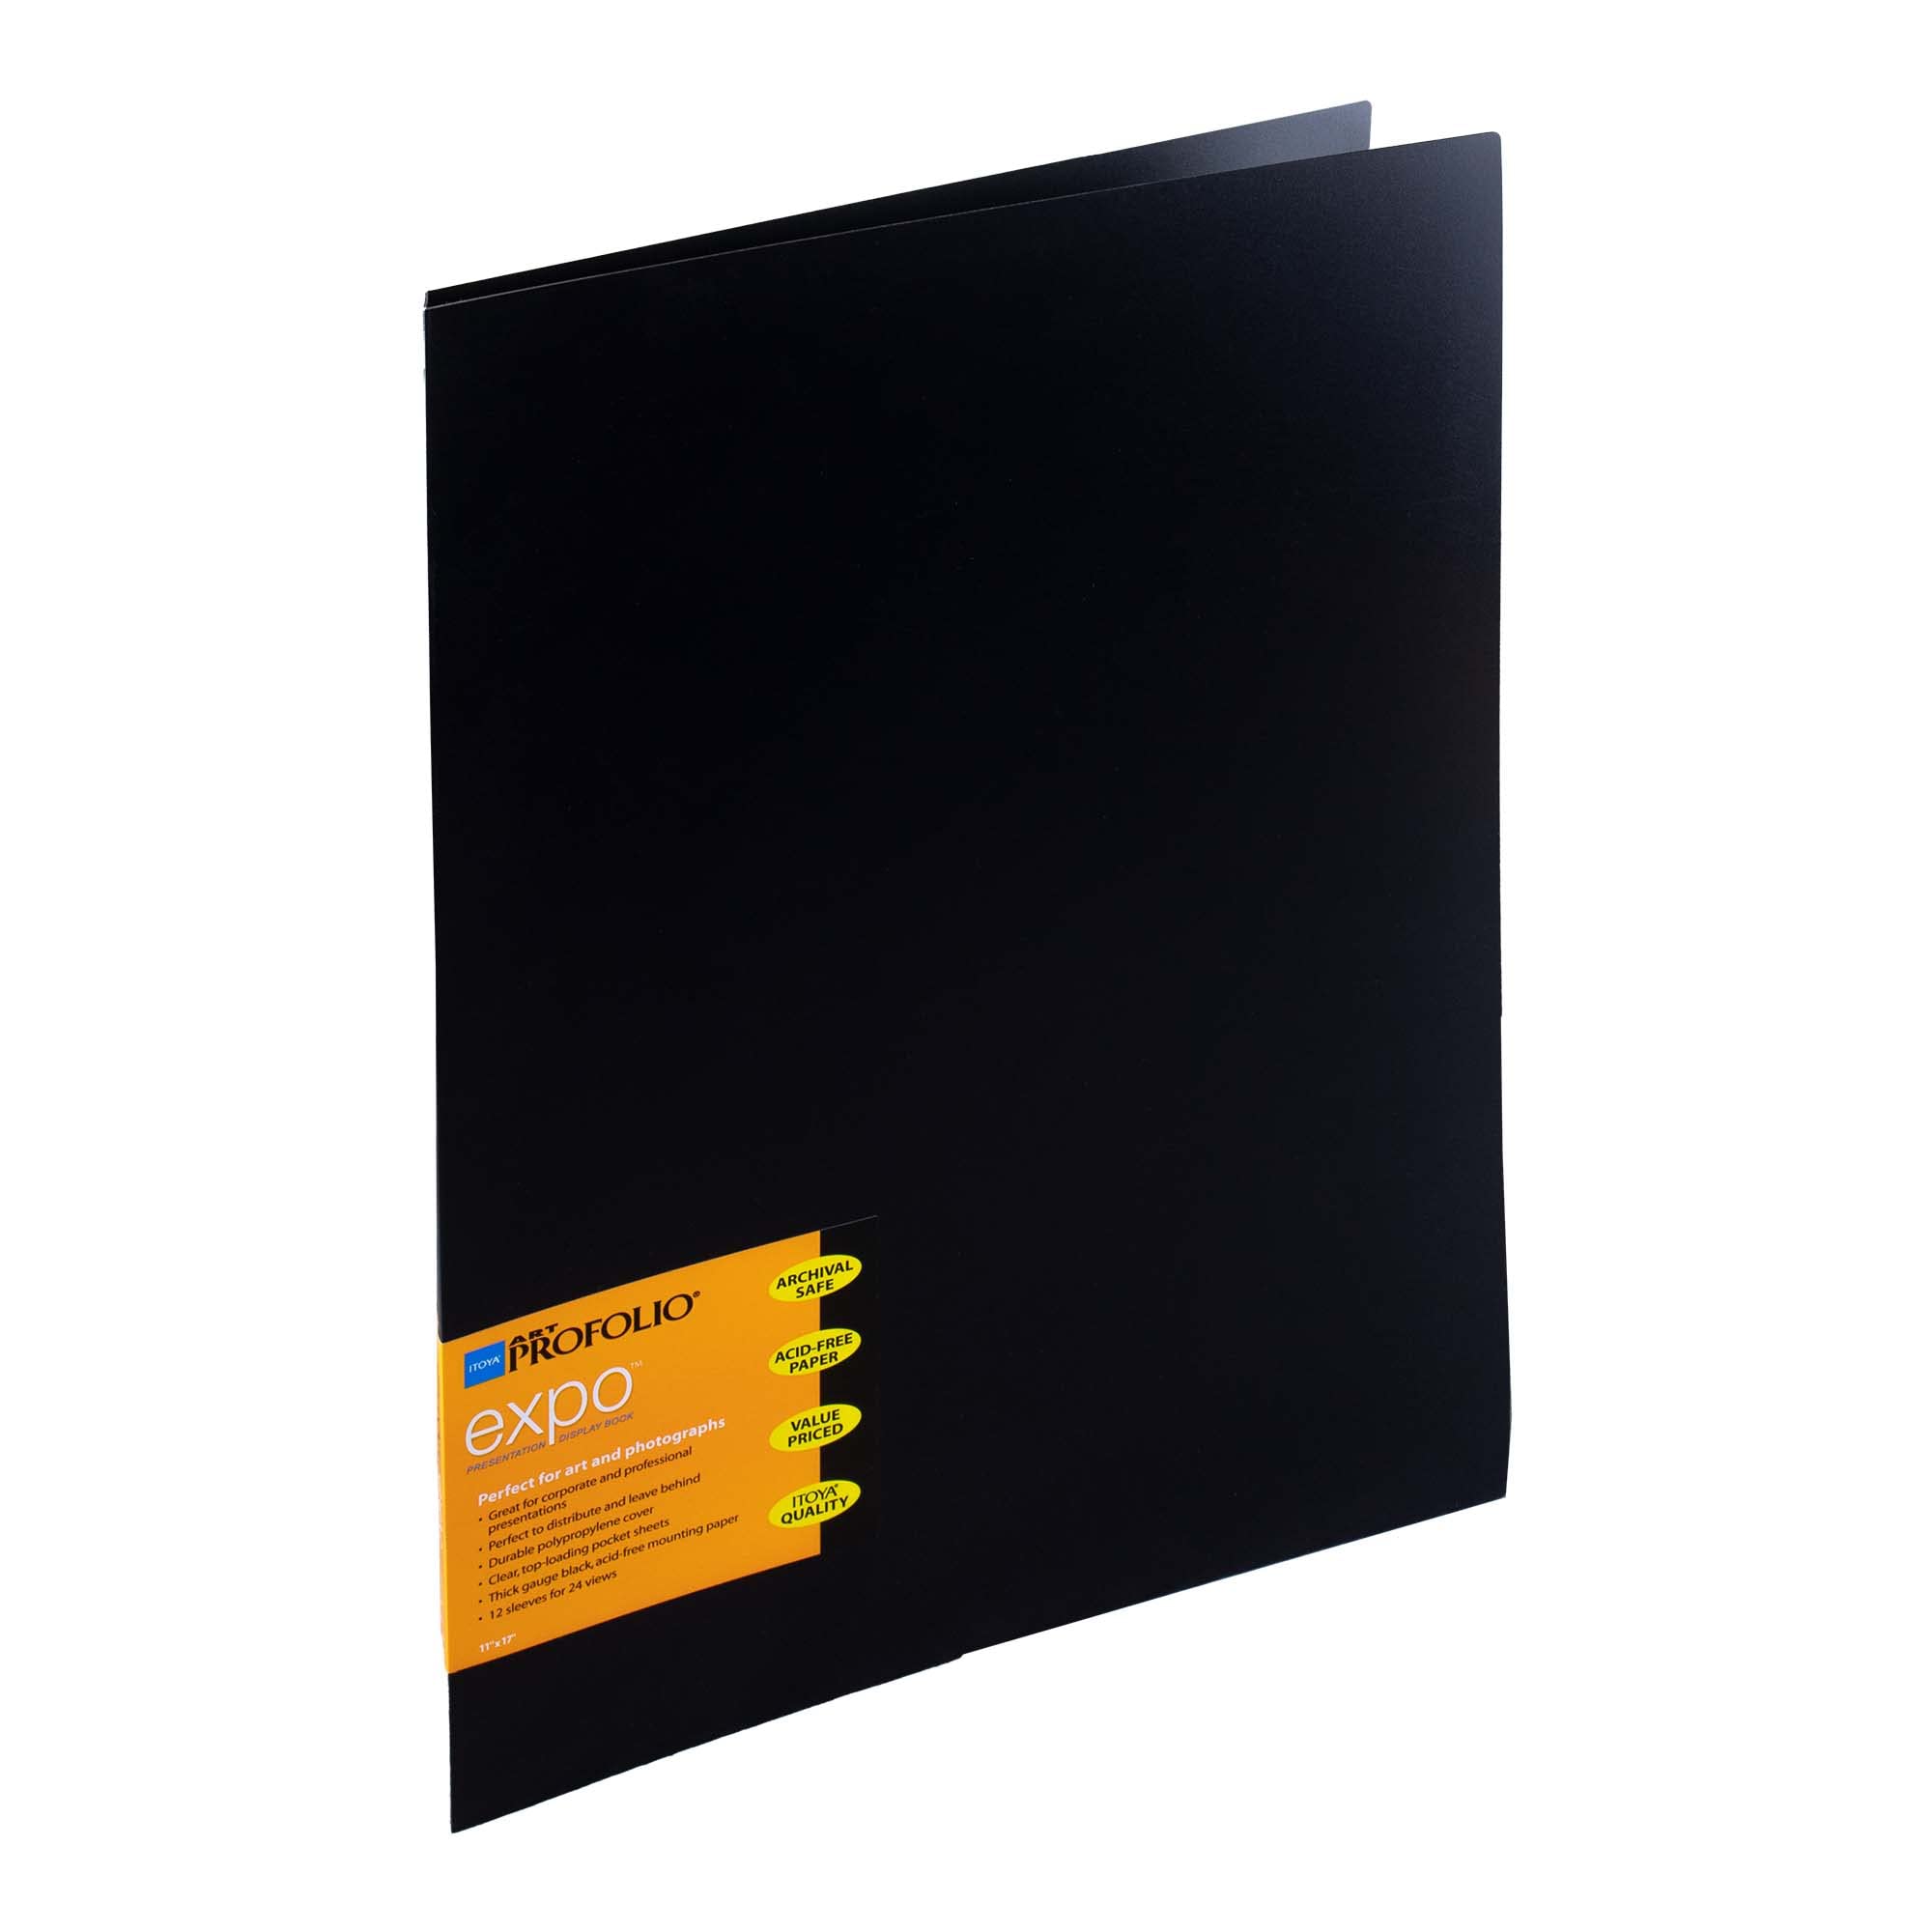 Itoya ProFolio Expo 11x17 Black Art Portfolio Binder with Plastic